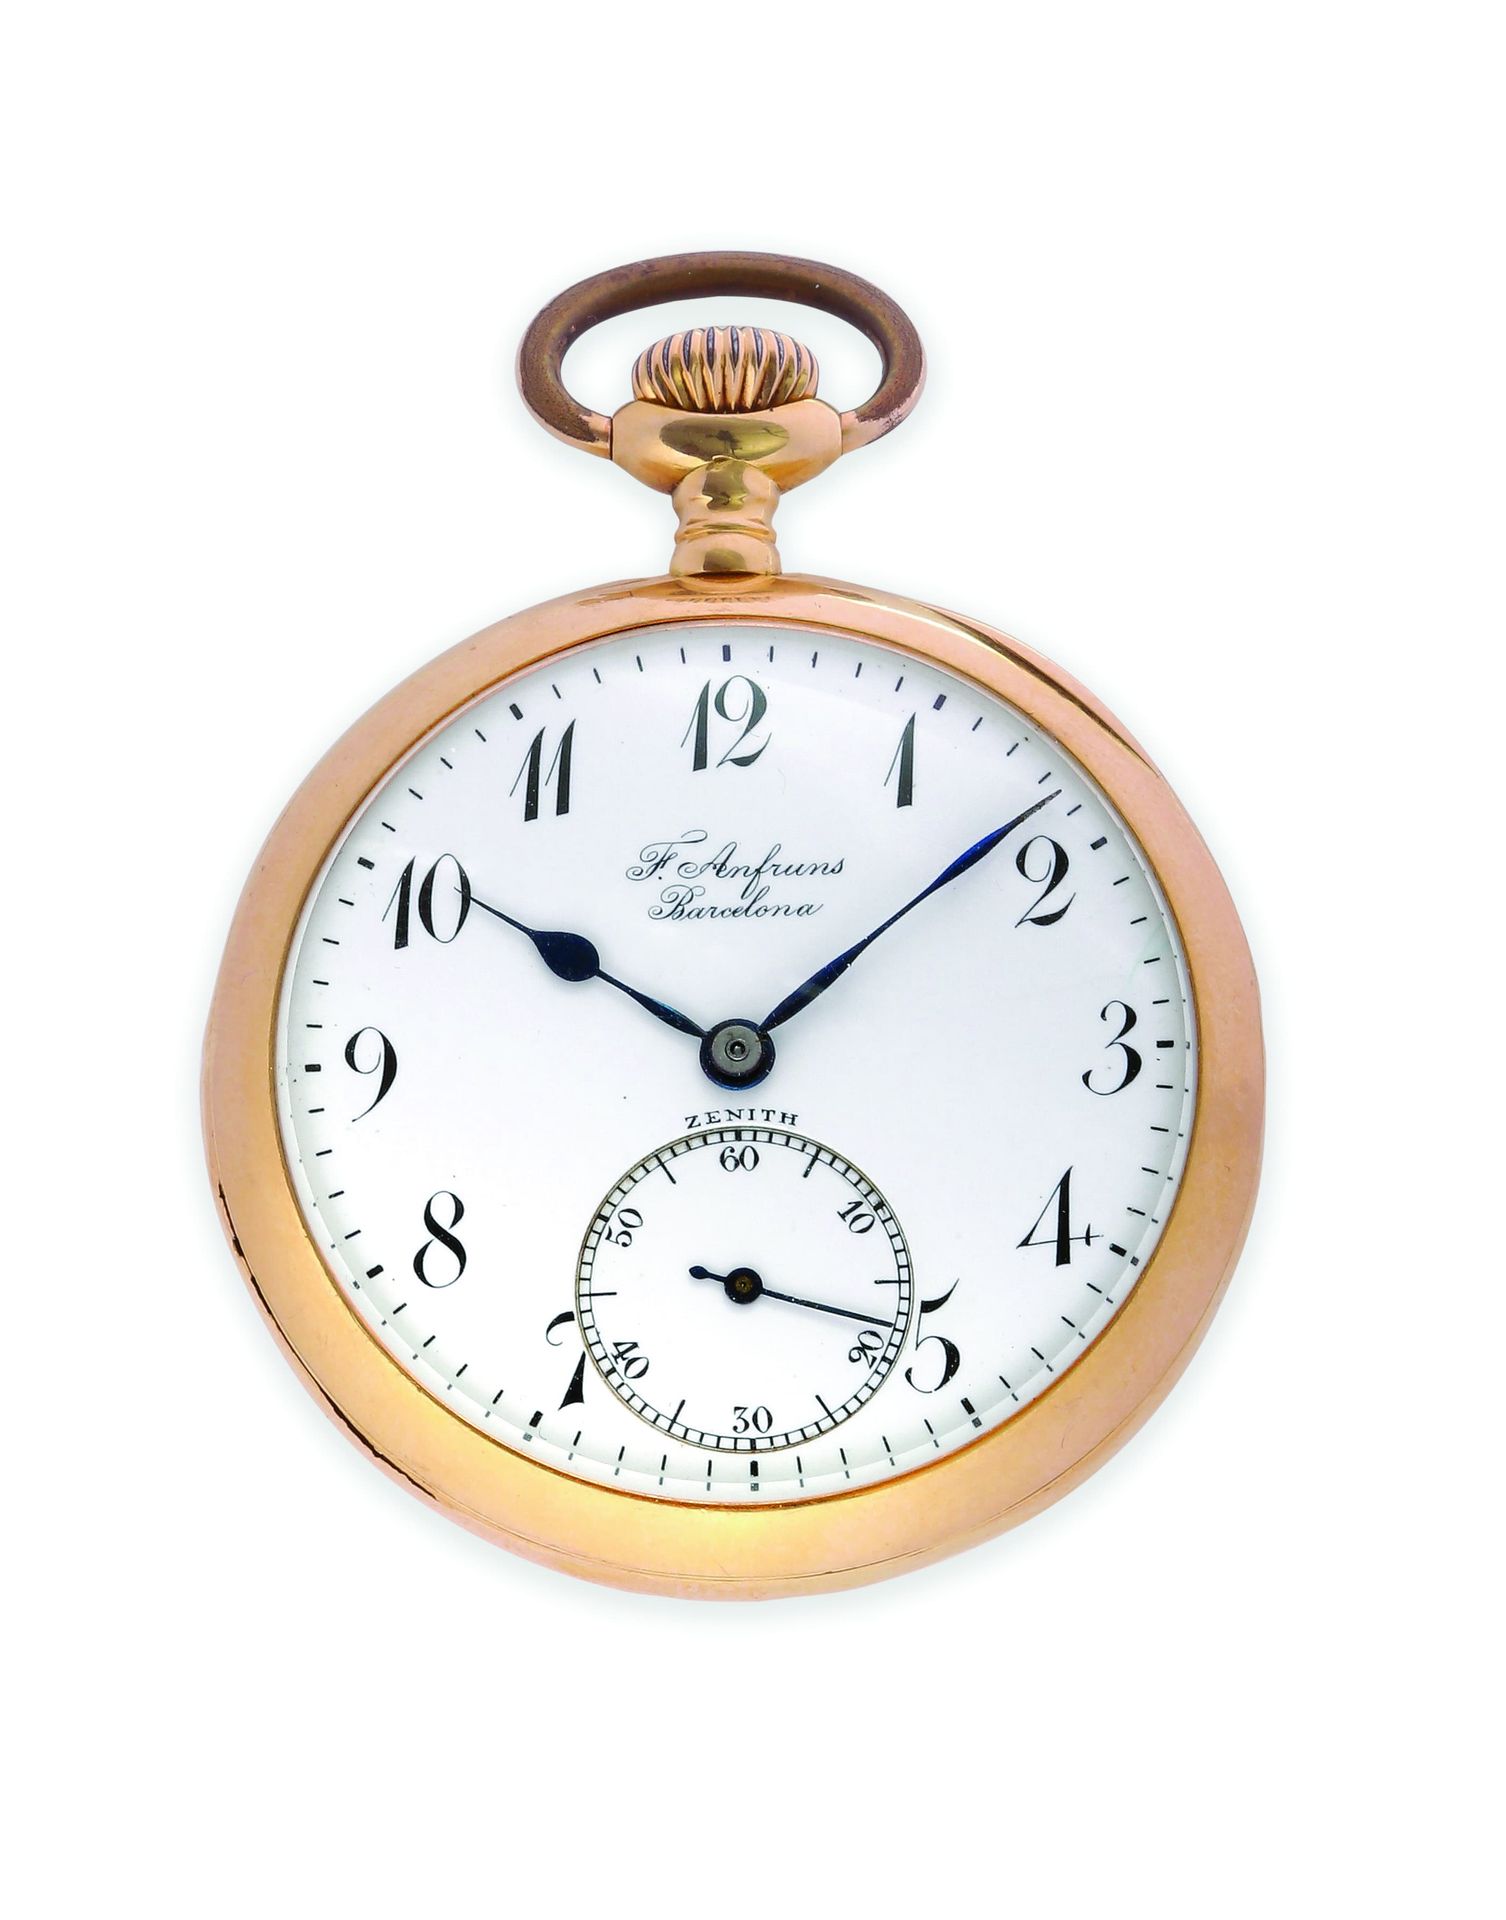 ZÉNITH F. ANFRUNS EN BARCELONA
Reloj de bolsillo en oro amarillo de 18 quilates &hellip;